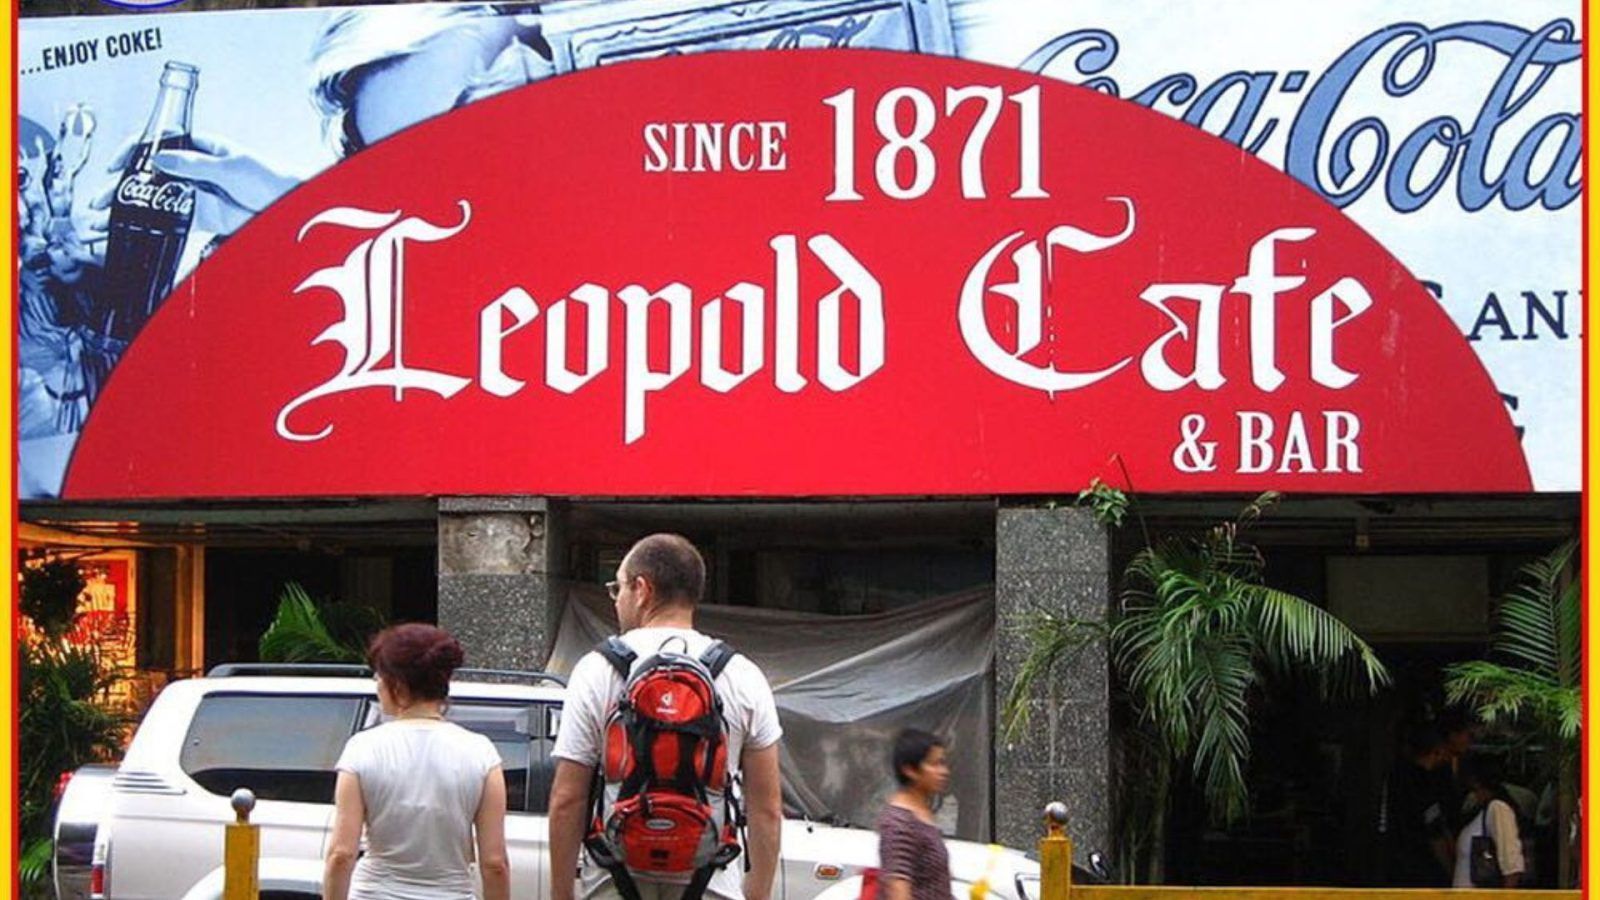 File:Cafe leopold damage Mumbai nov 2008.jpg - Wikipedia